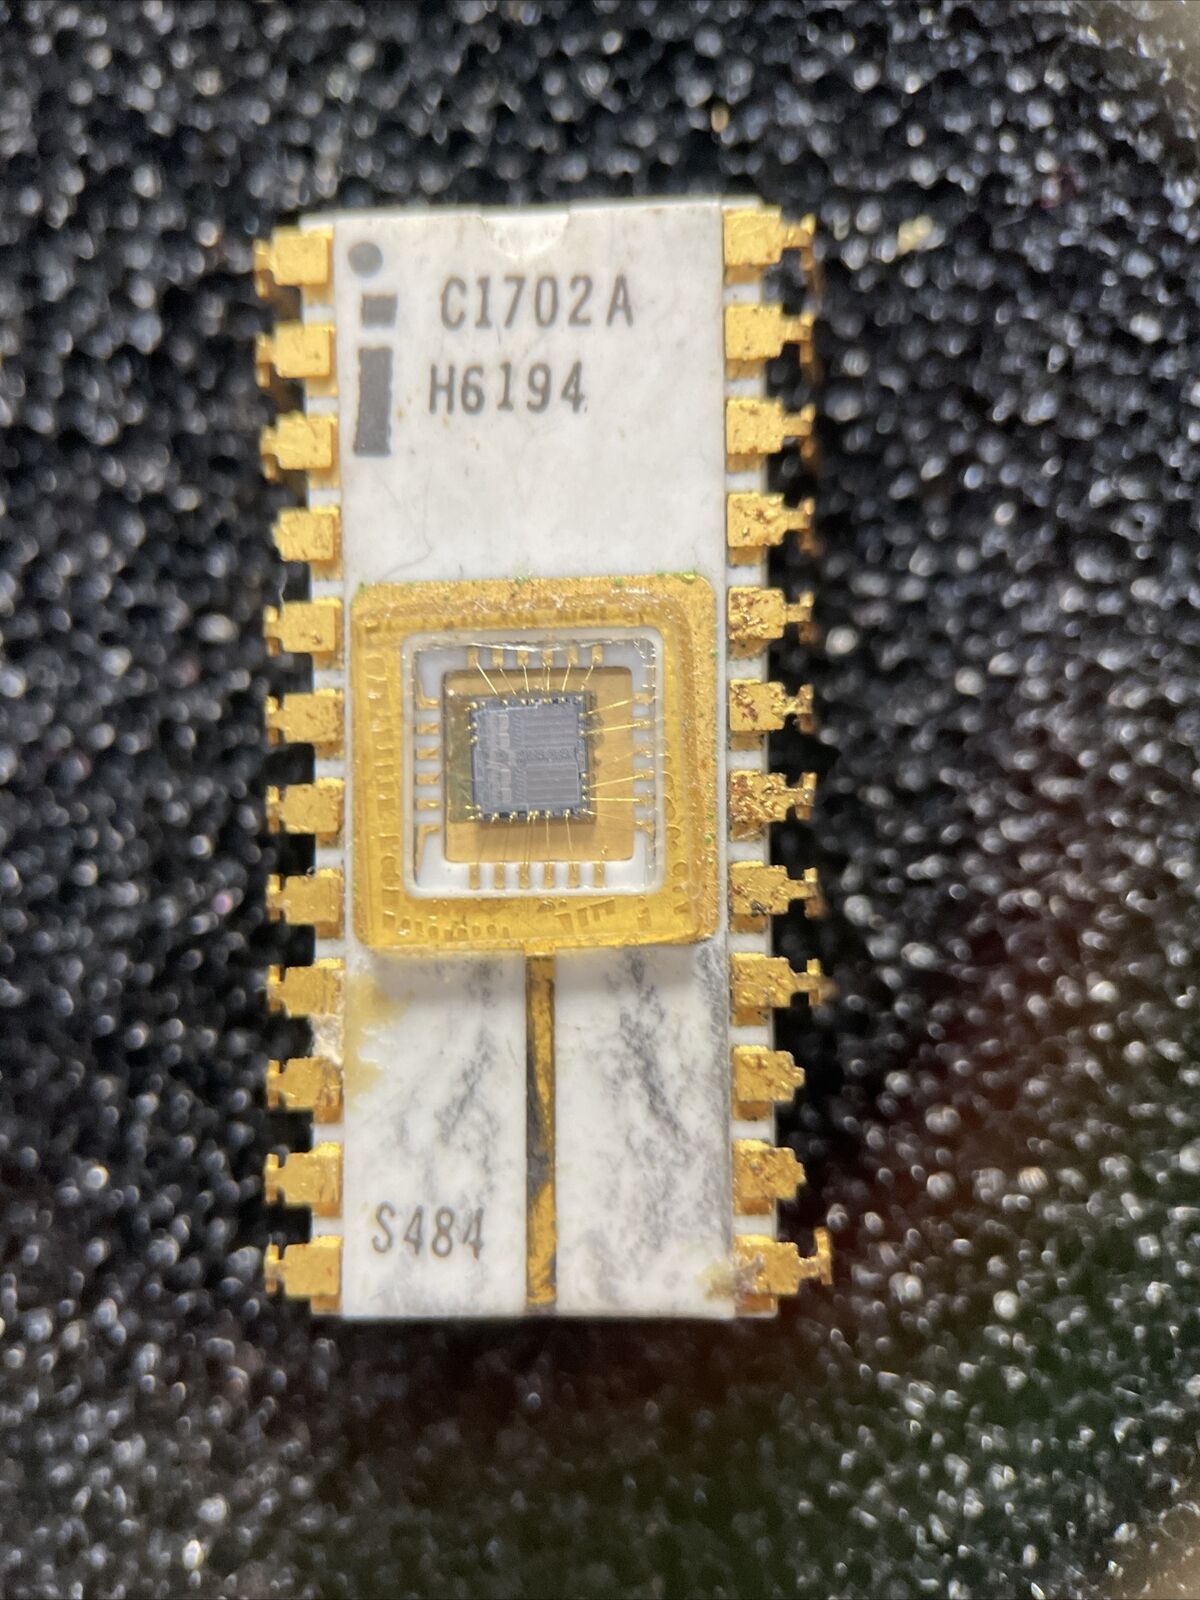 Vintage Computer Chip Gold White Ceramic Intel C1702A Static EPROM 2048-bit 1972